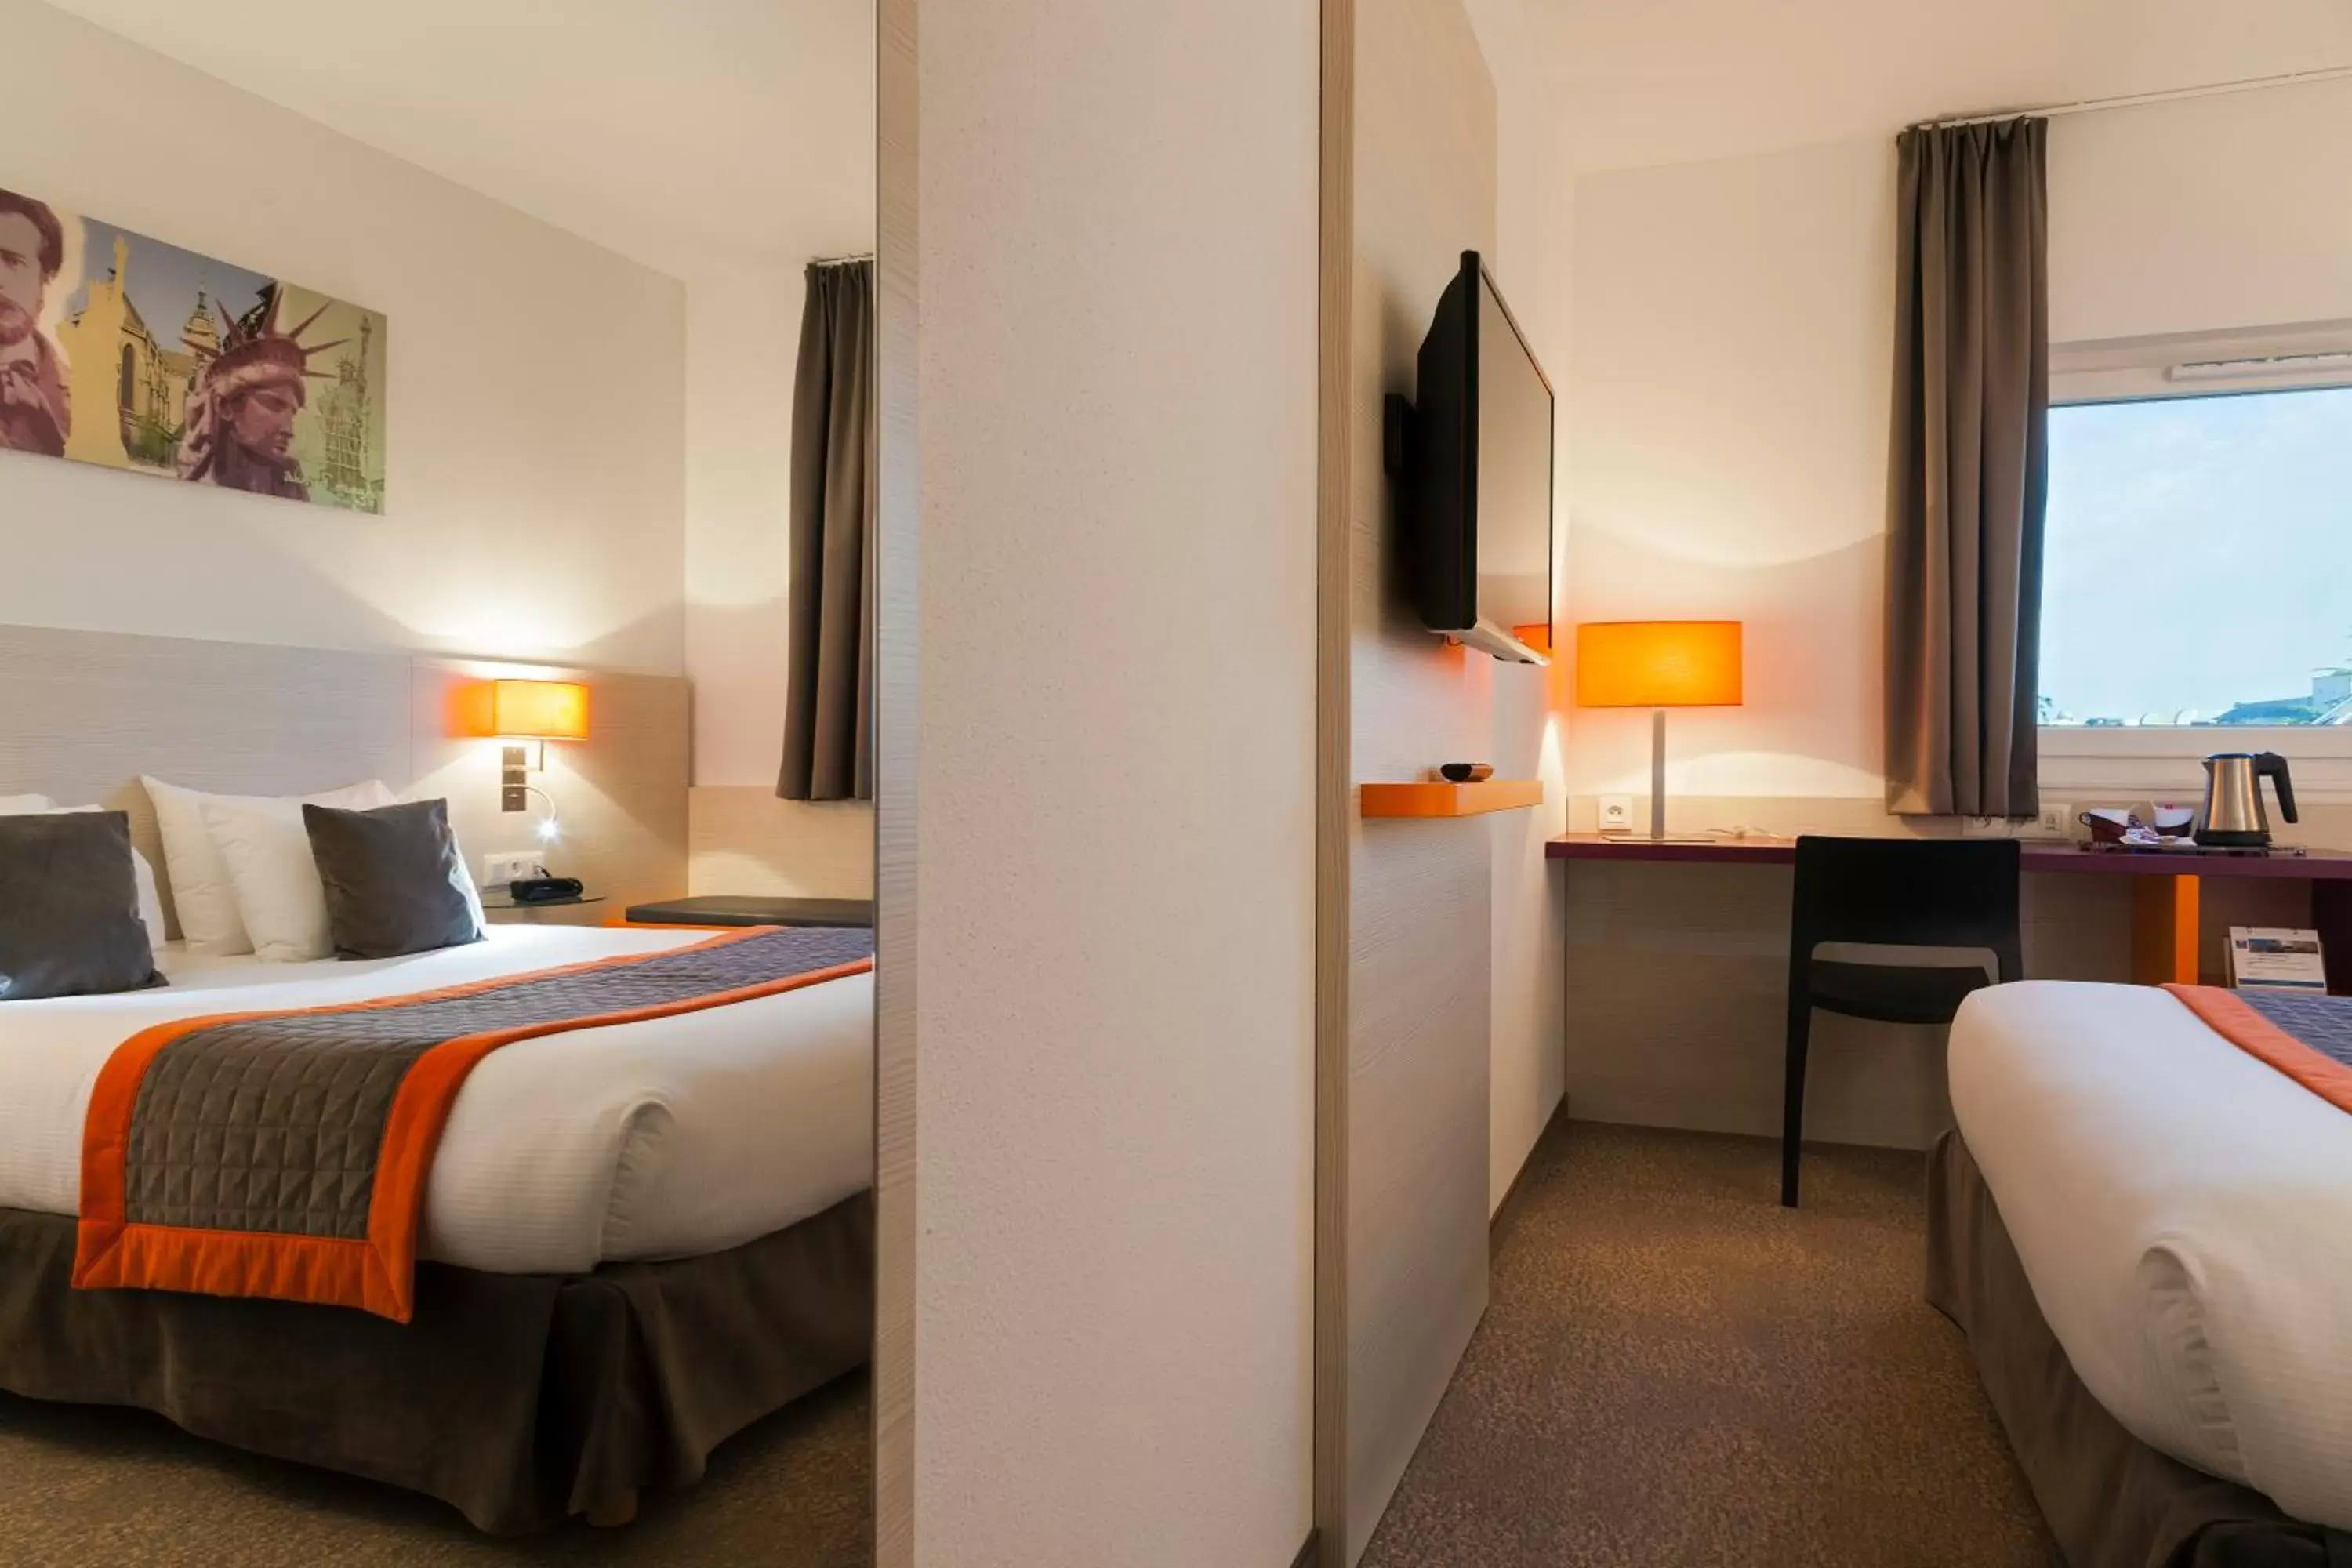 Bed, Room Photo in Comfort Hotel Expo Colmar